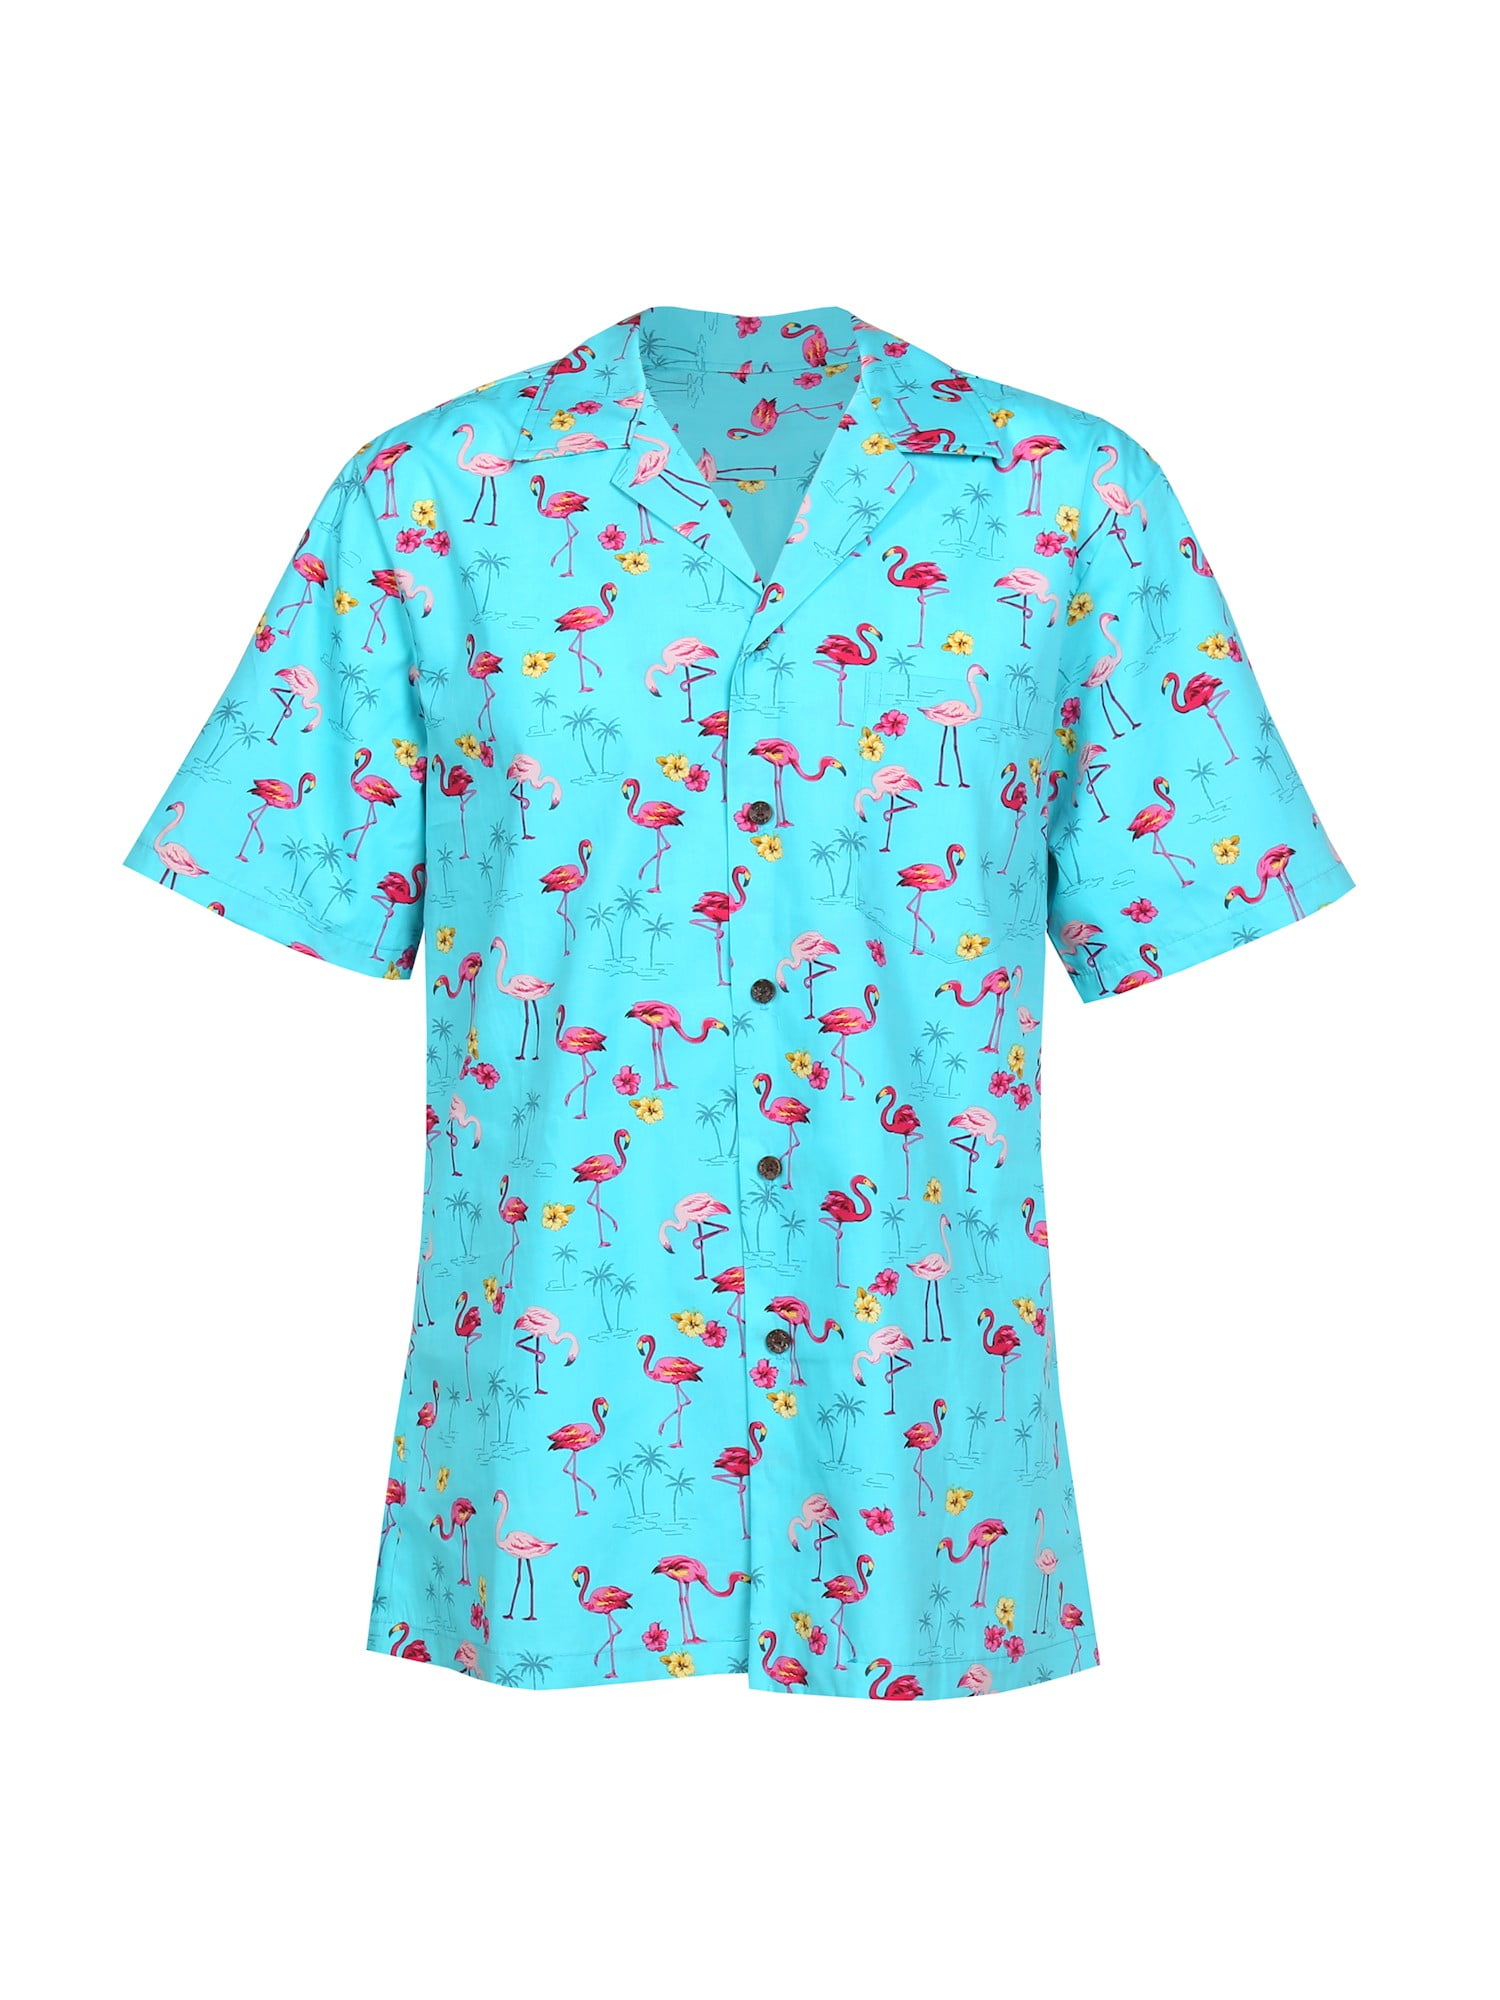 Robert J Clancey Mens Authentic Hawaiian Flamingo Shirt